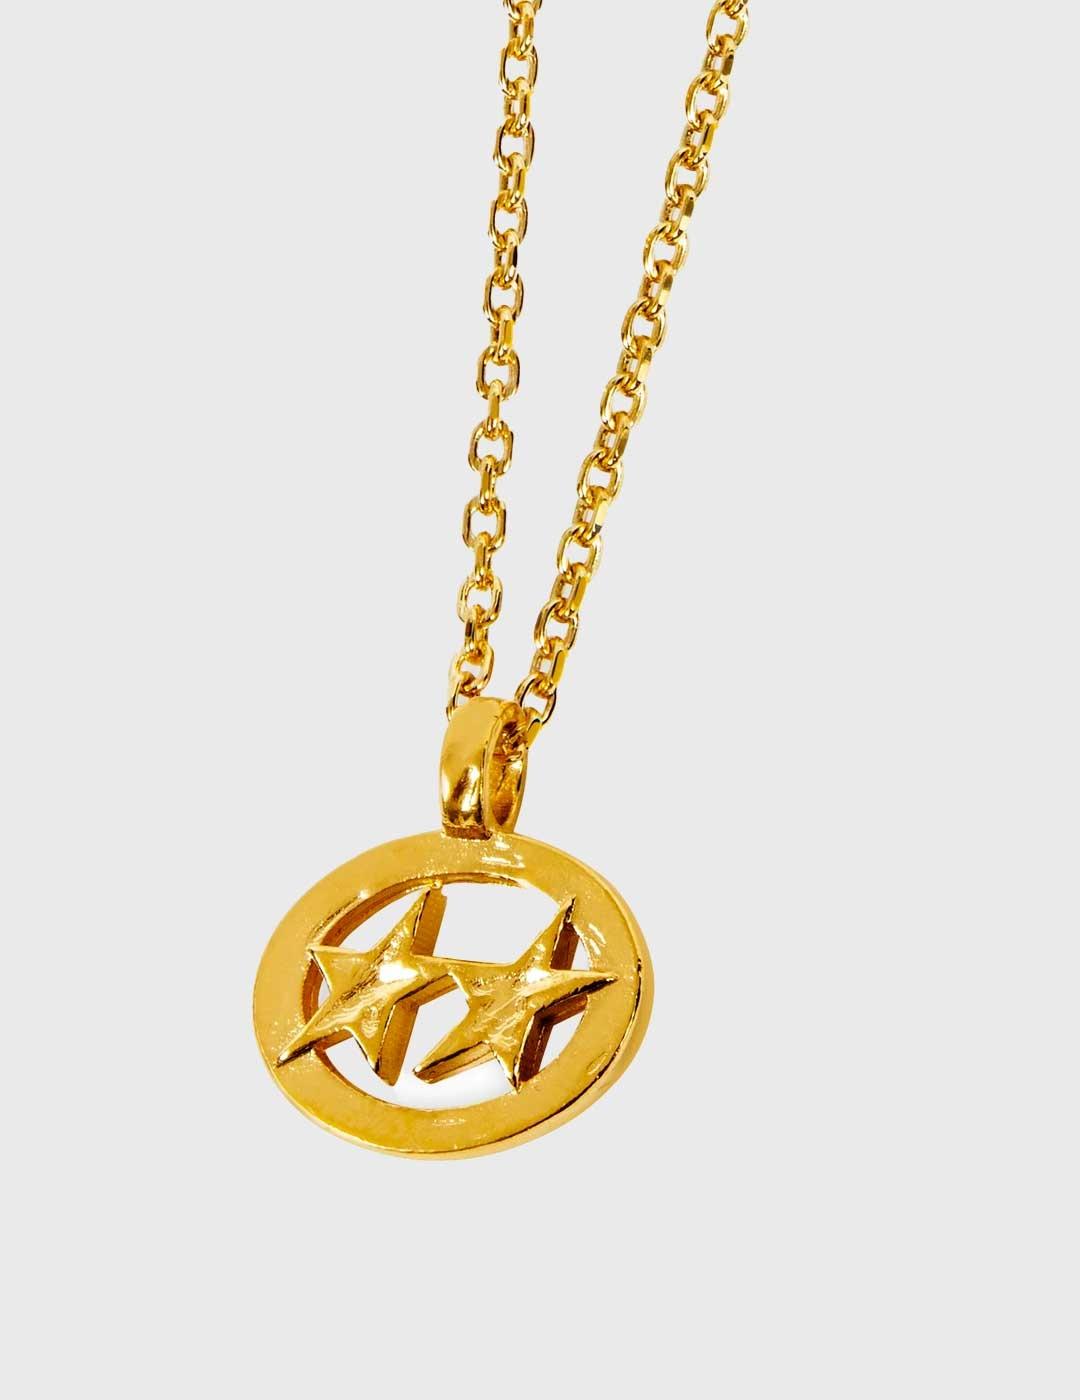 Colgante TwoJeys Superstar Necklace Gold dorado unisex